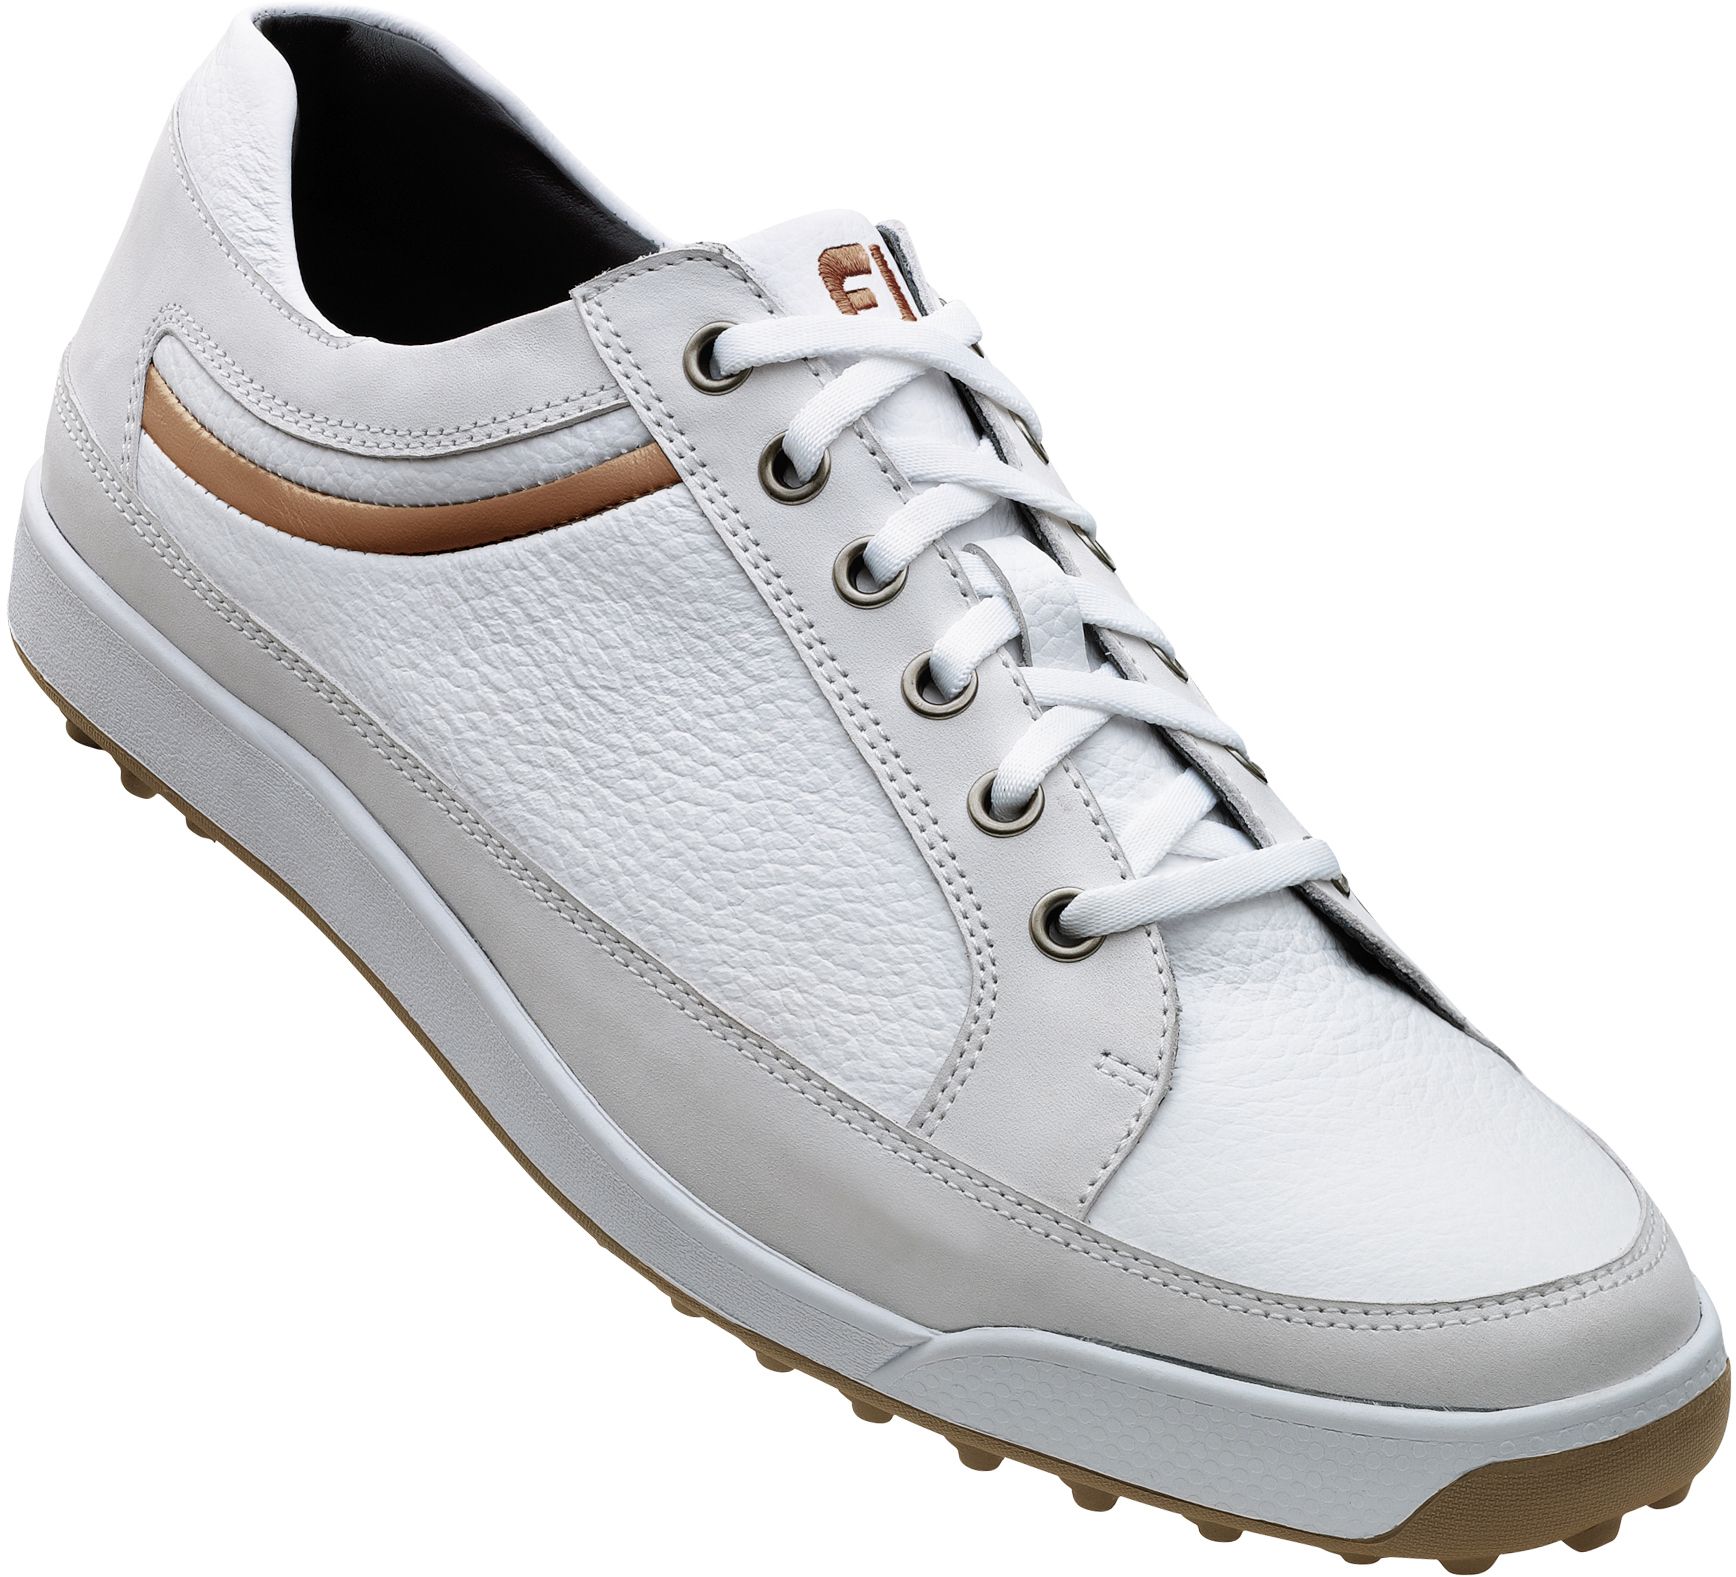 Footjoy Men’s Contour Casual Golf Shoe – White/taupe | Golf